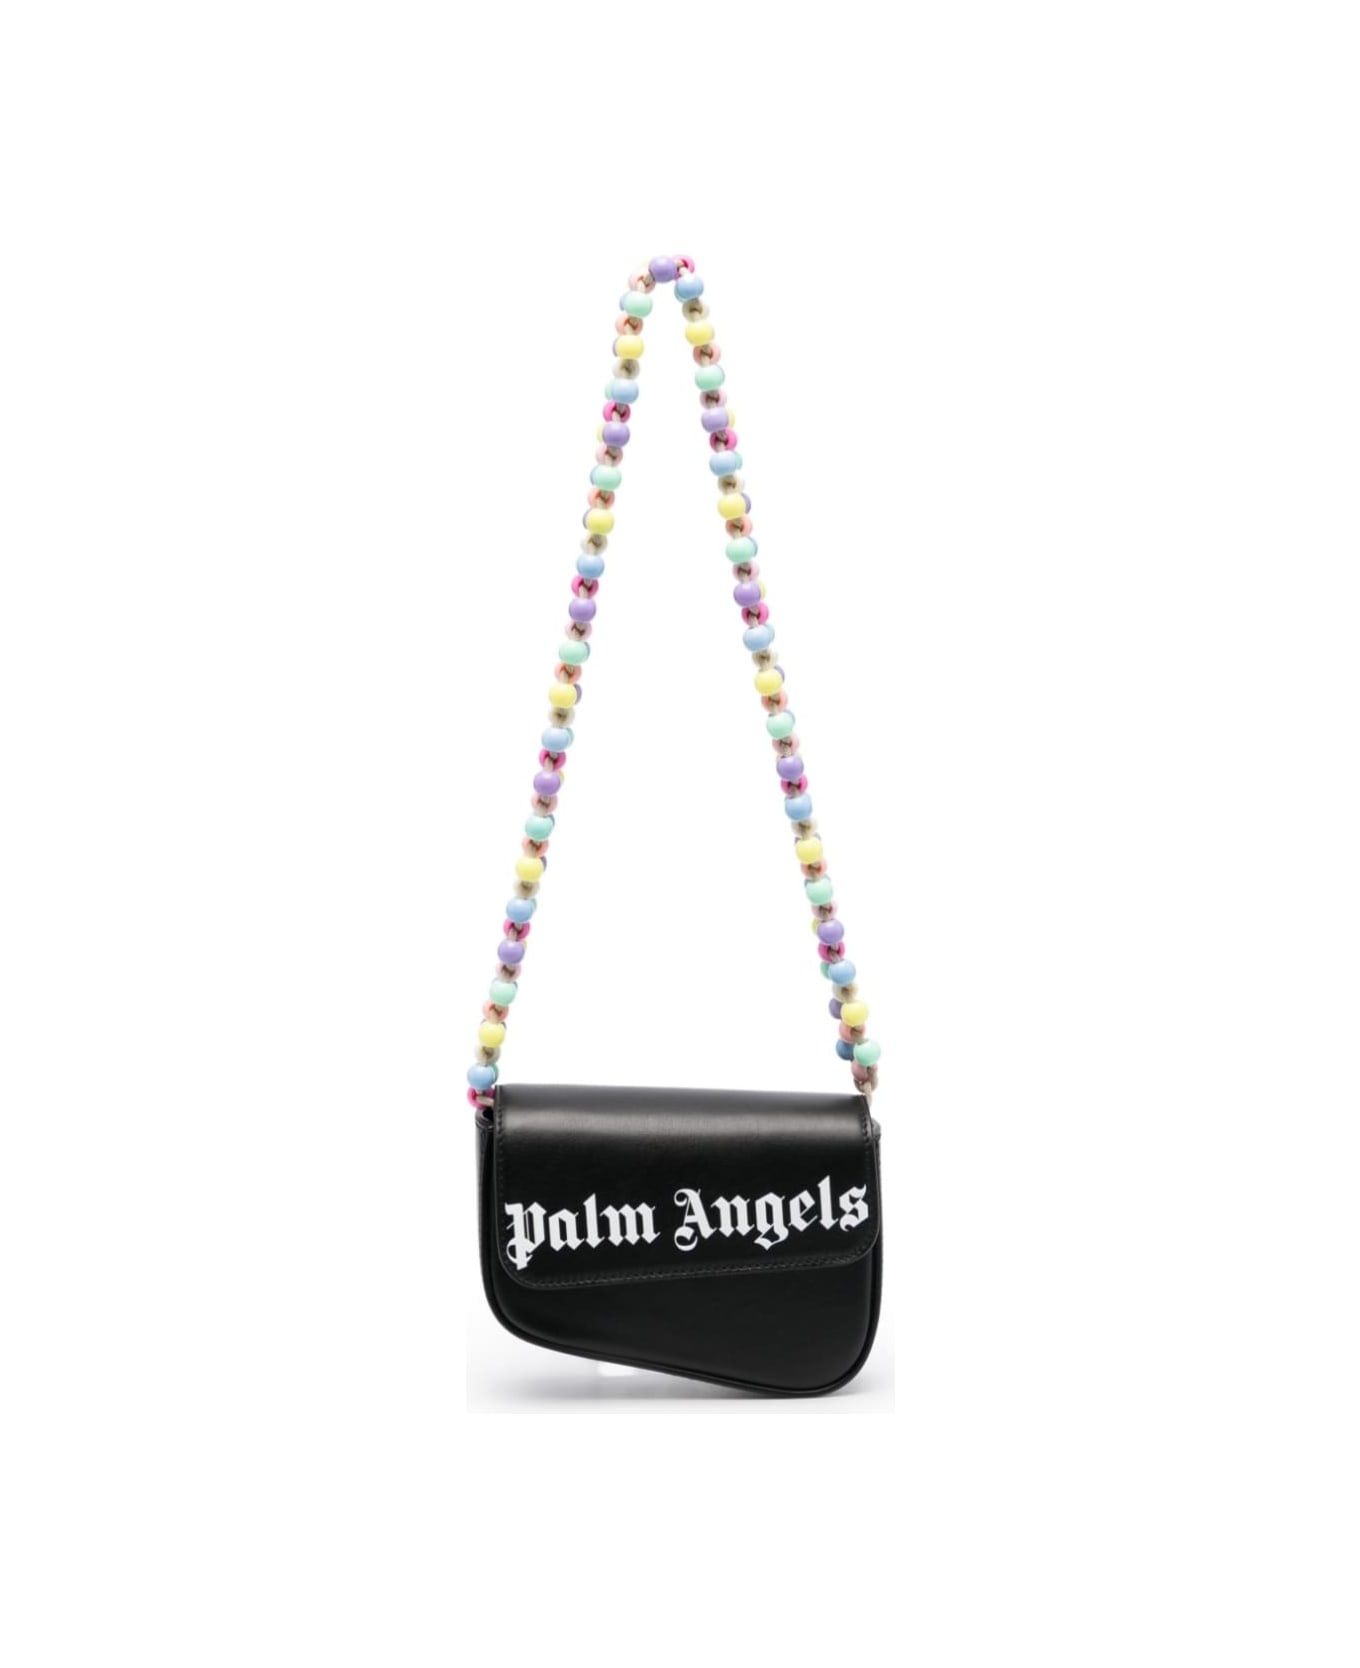 Palm Angels Beads Strap Crash Bag - Black